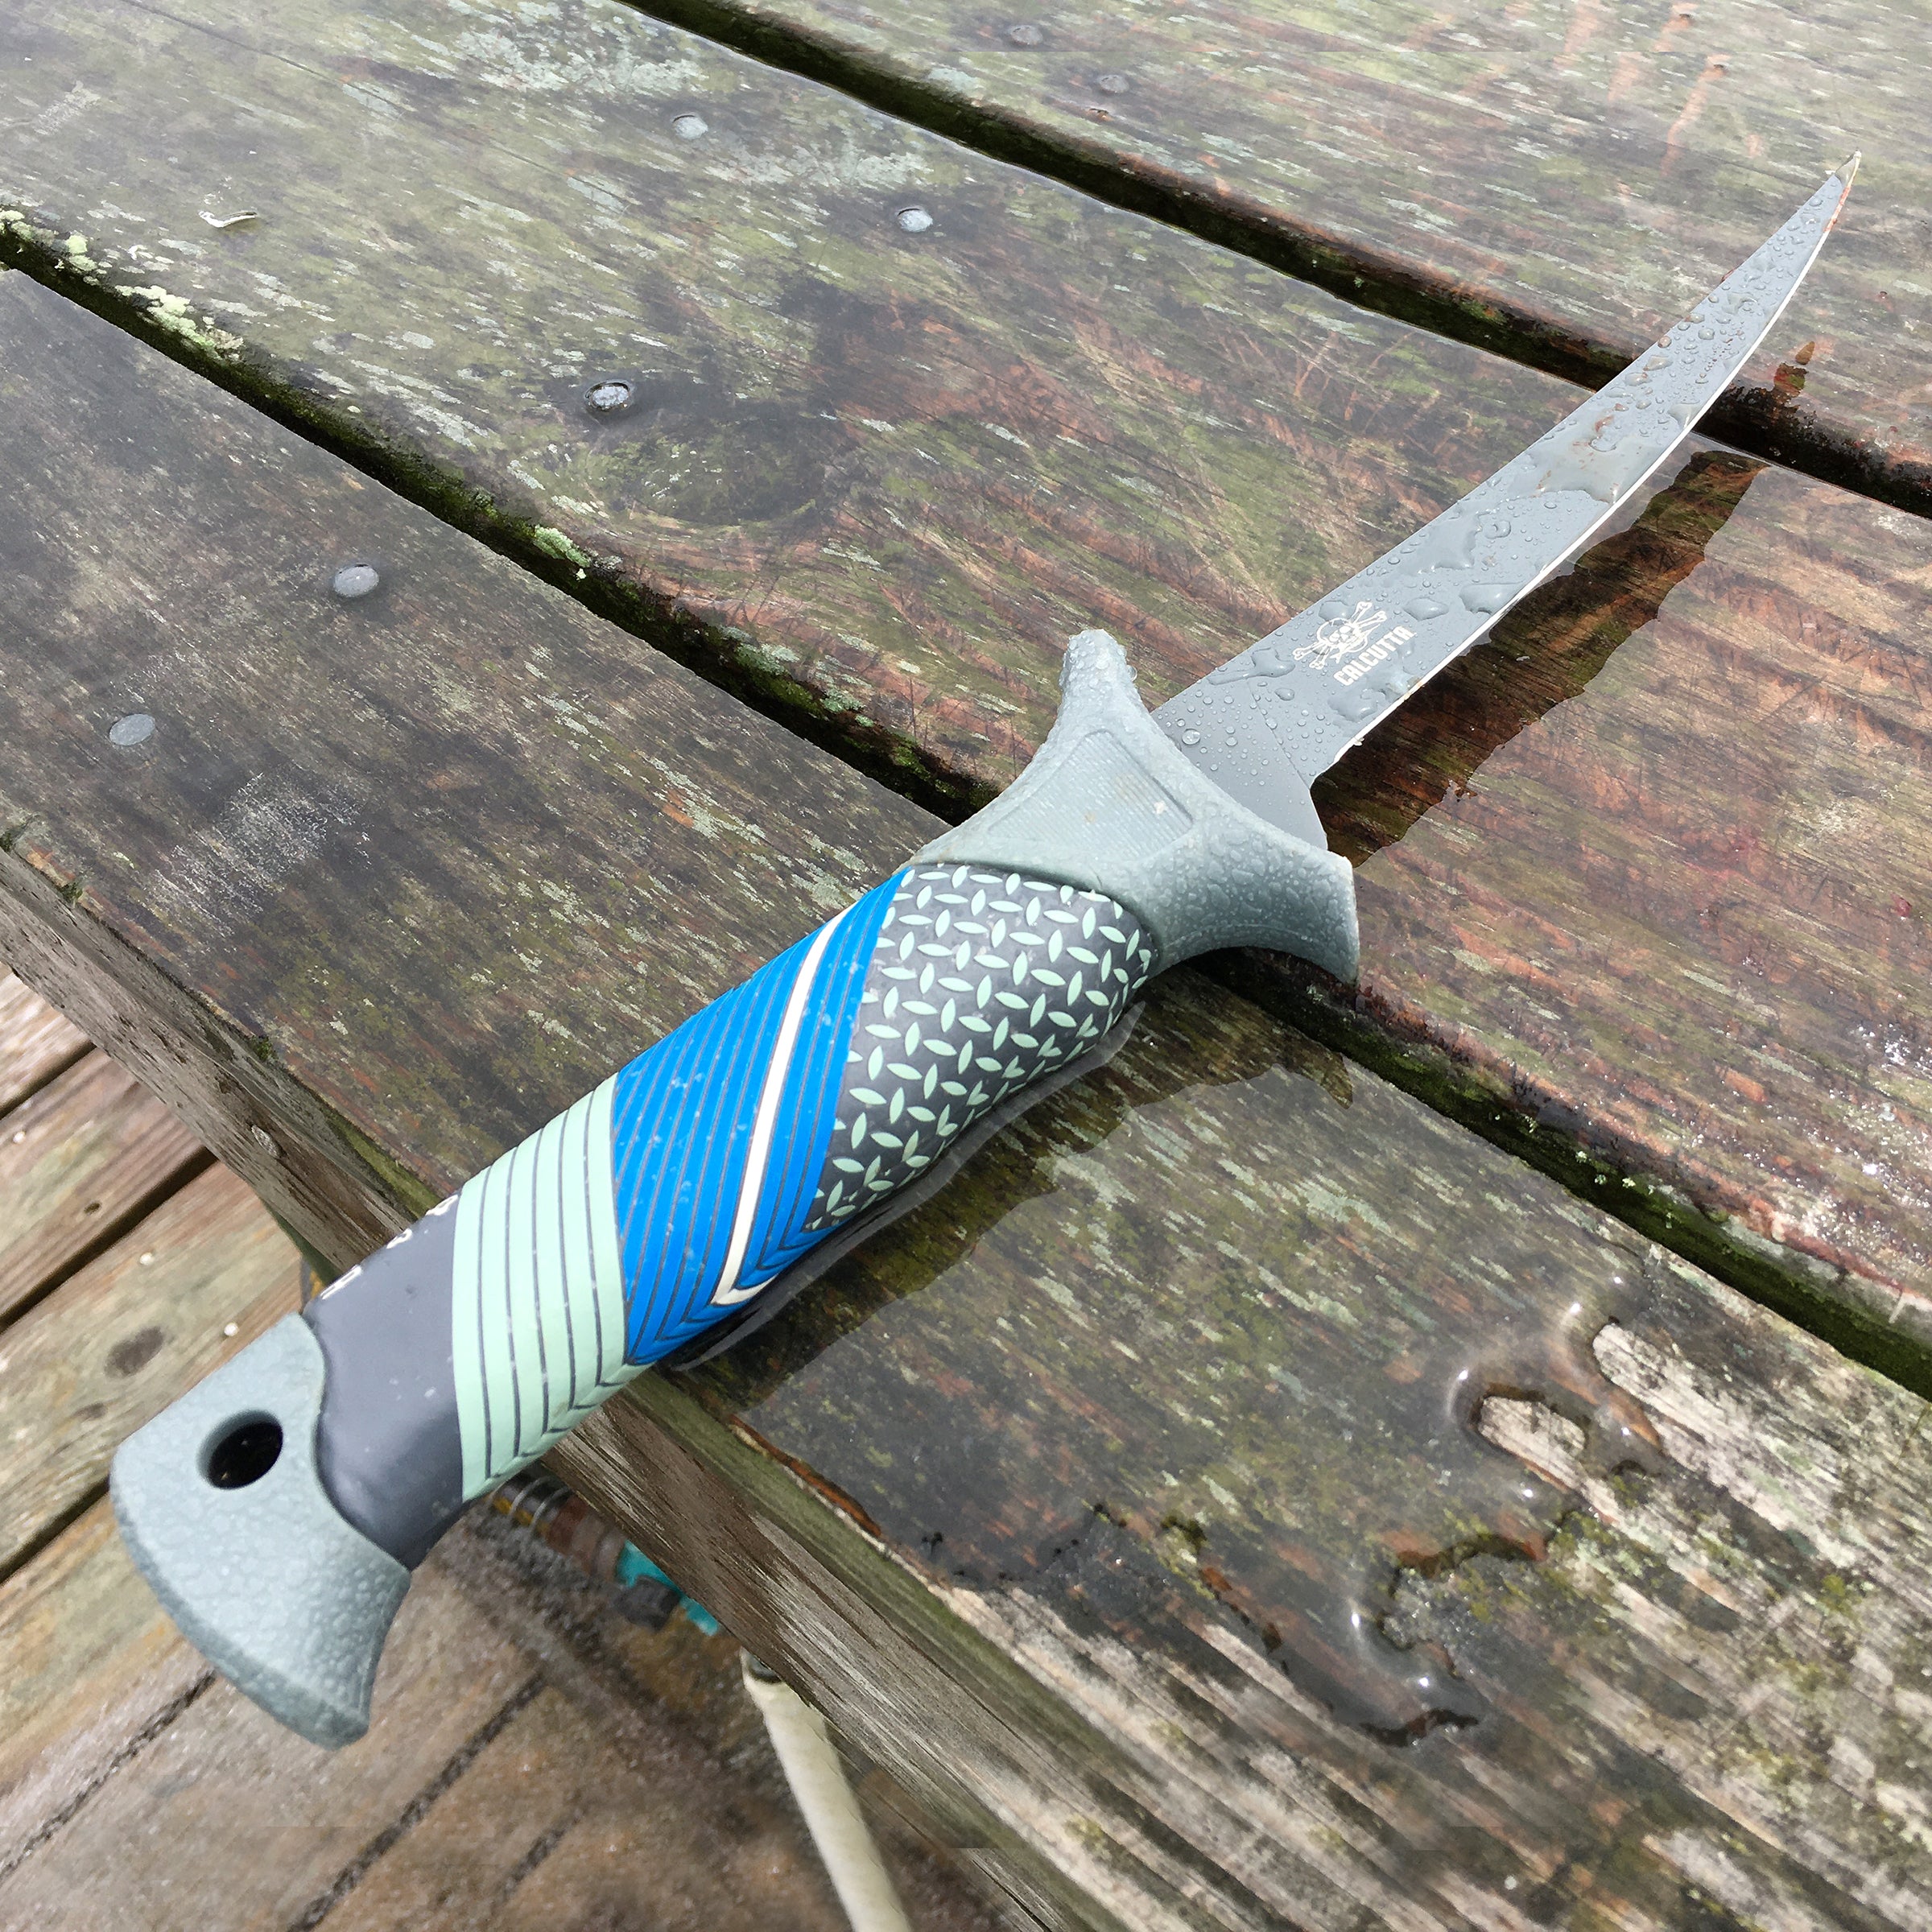 Squall Torque Series Fillet Knife Kit